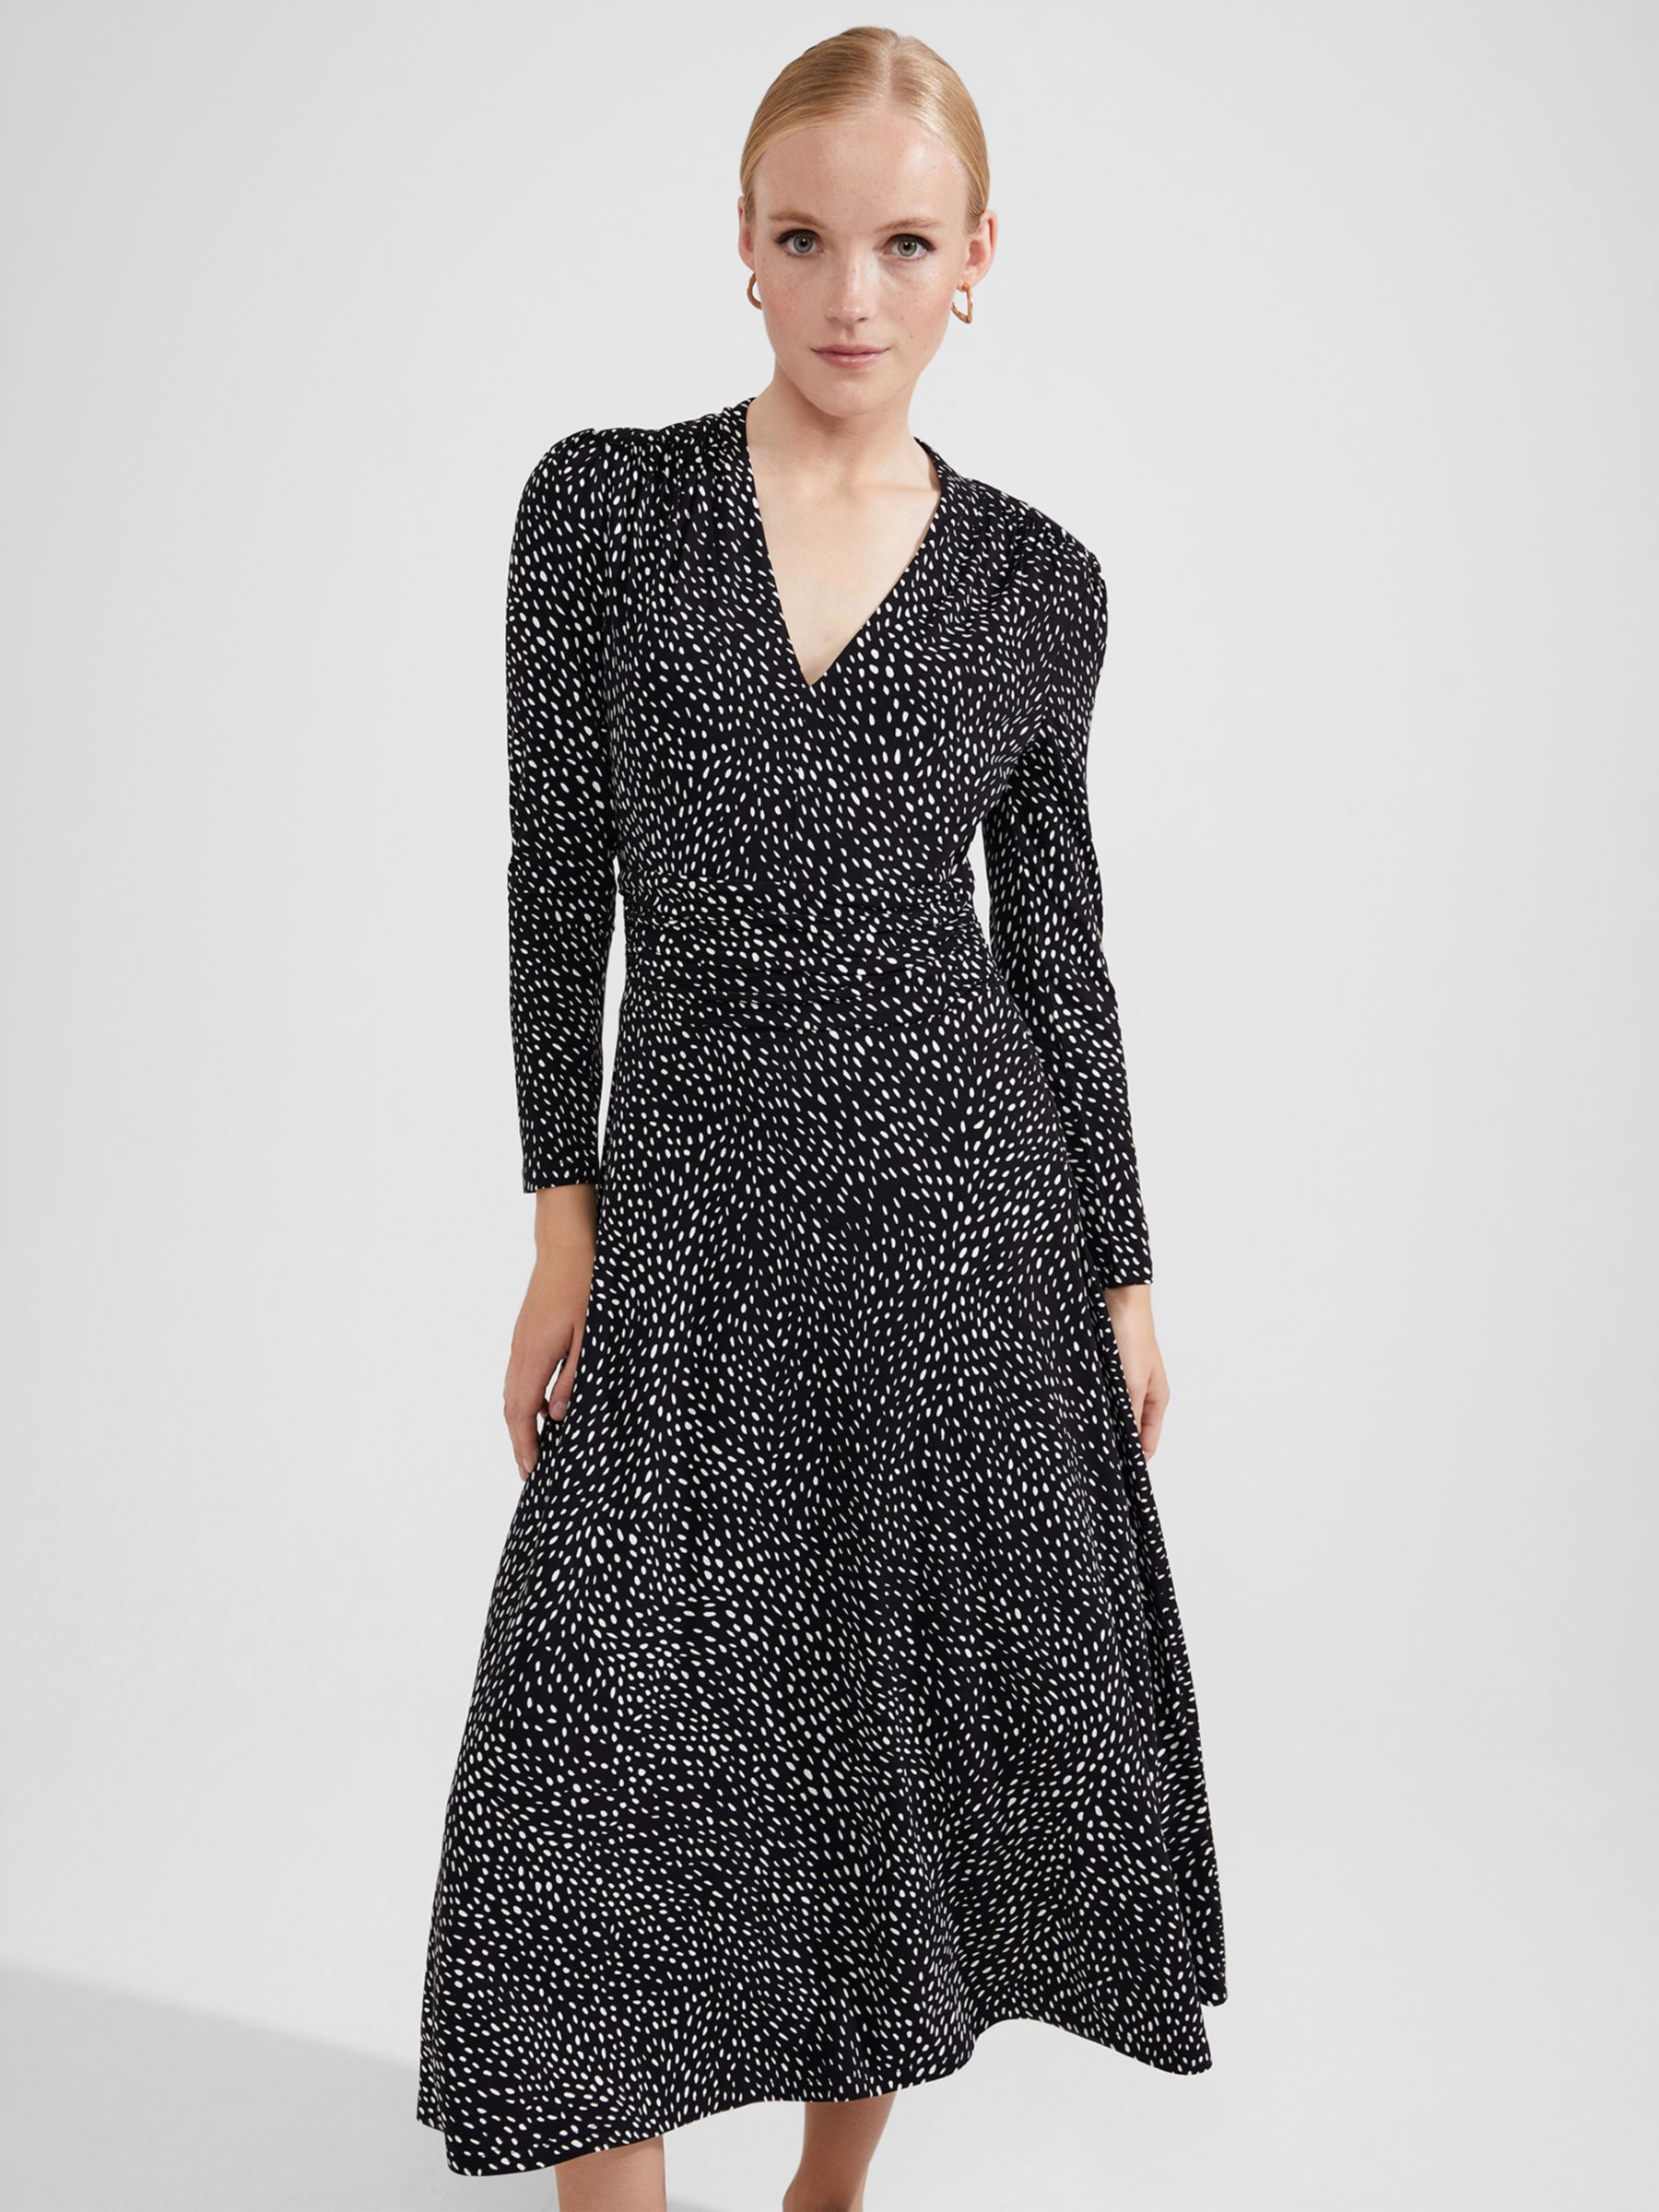 Hobbs Drew Ecovero Print Jersey Dress, Black/Ivory, 10